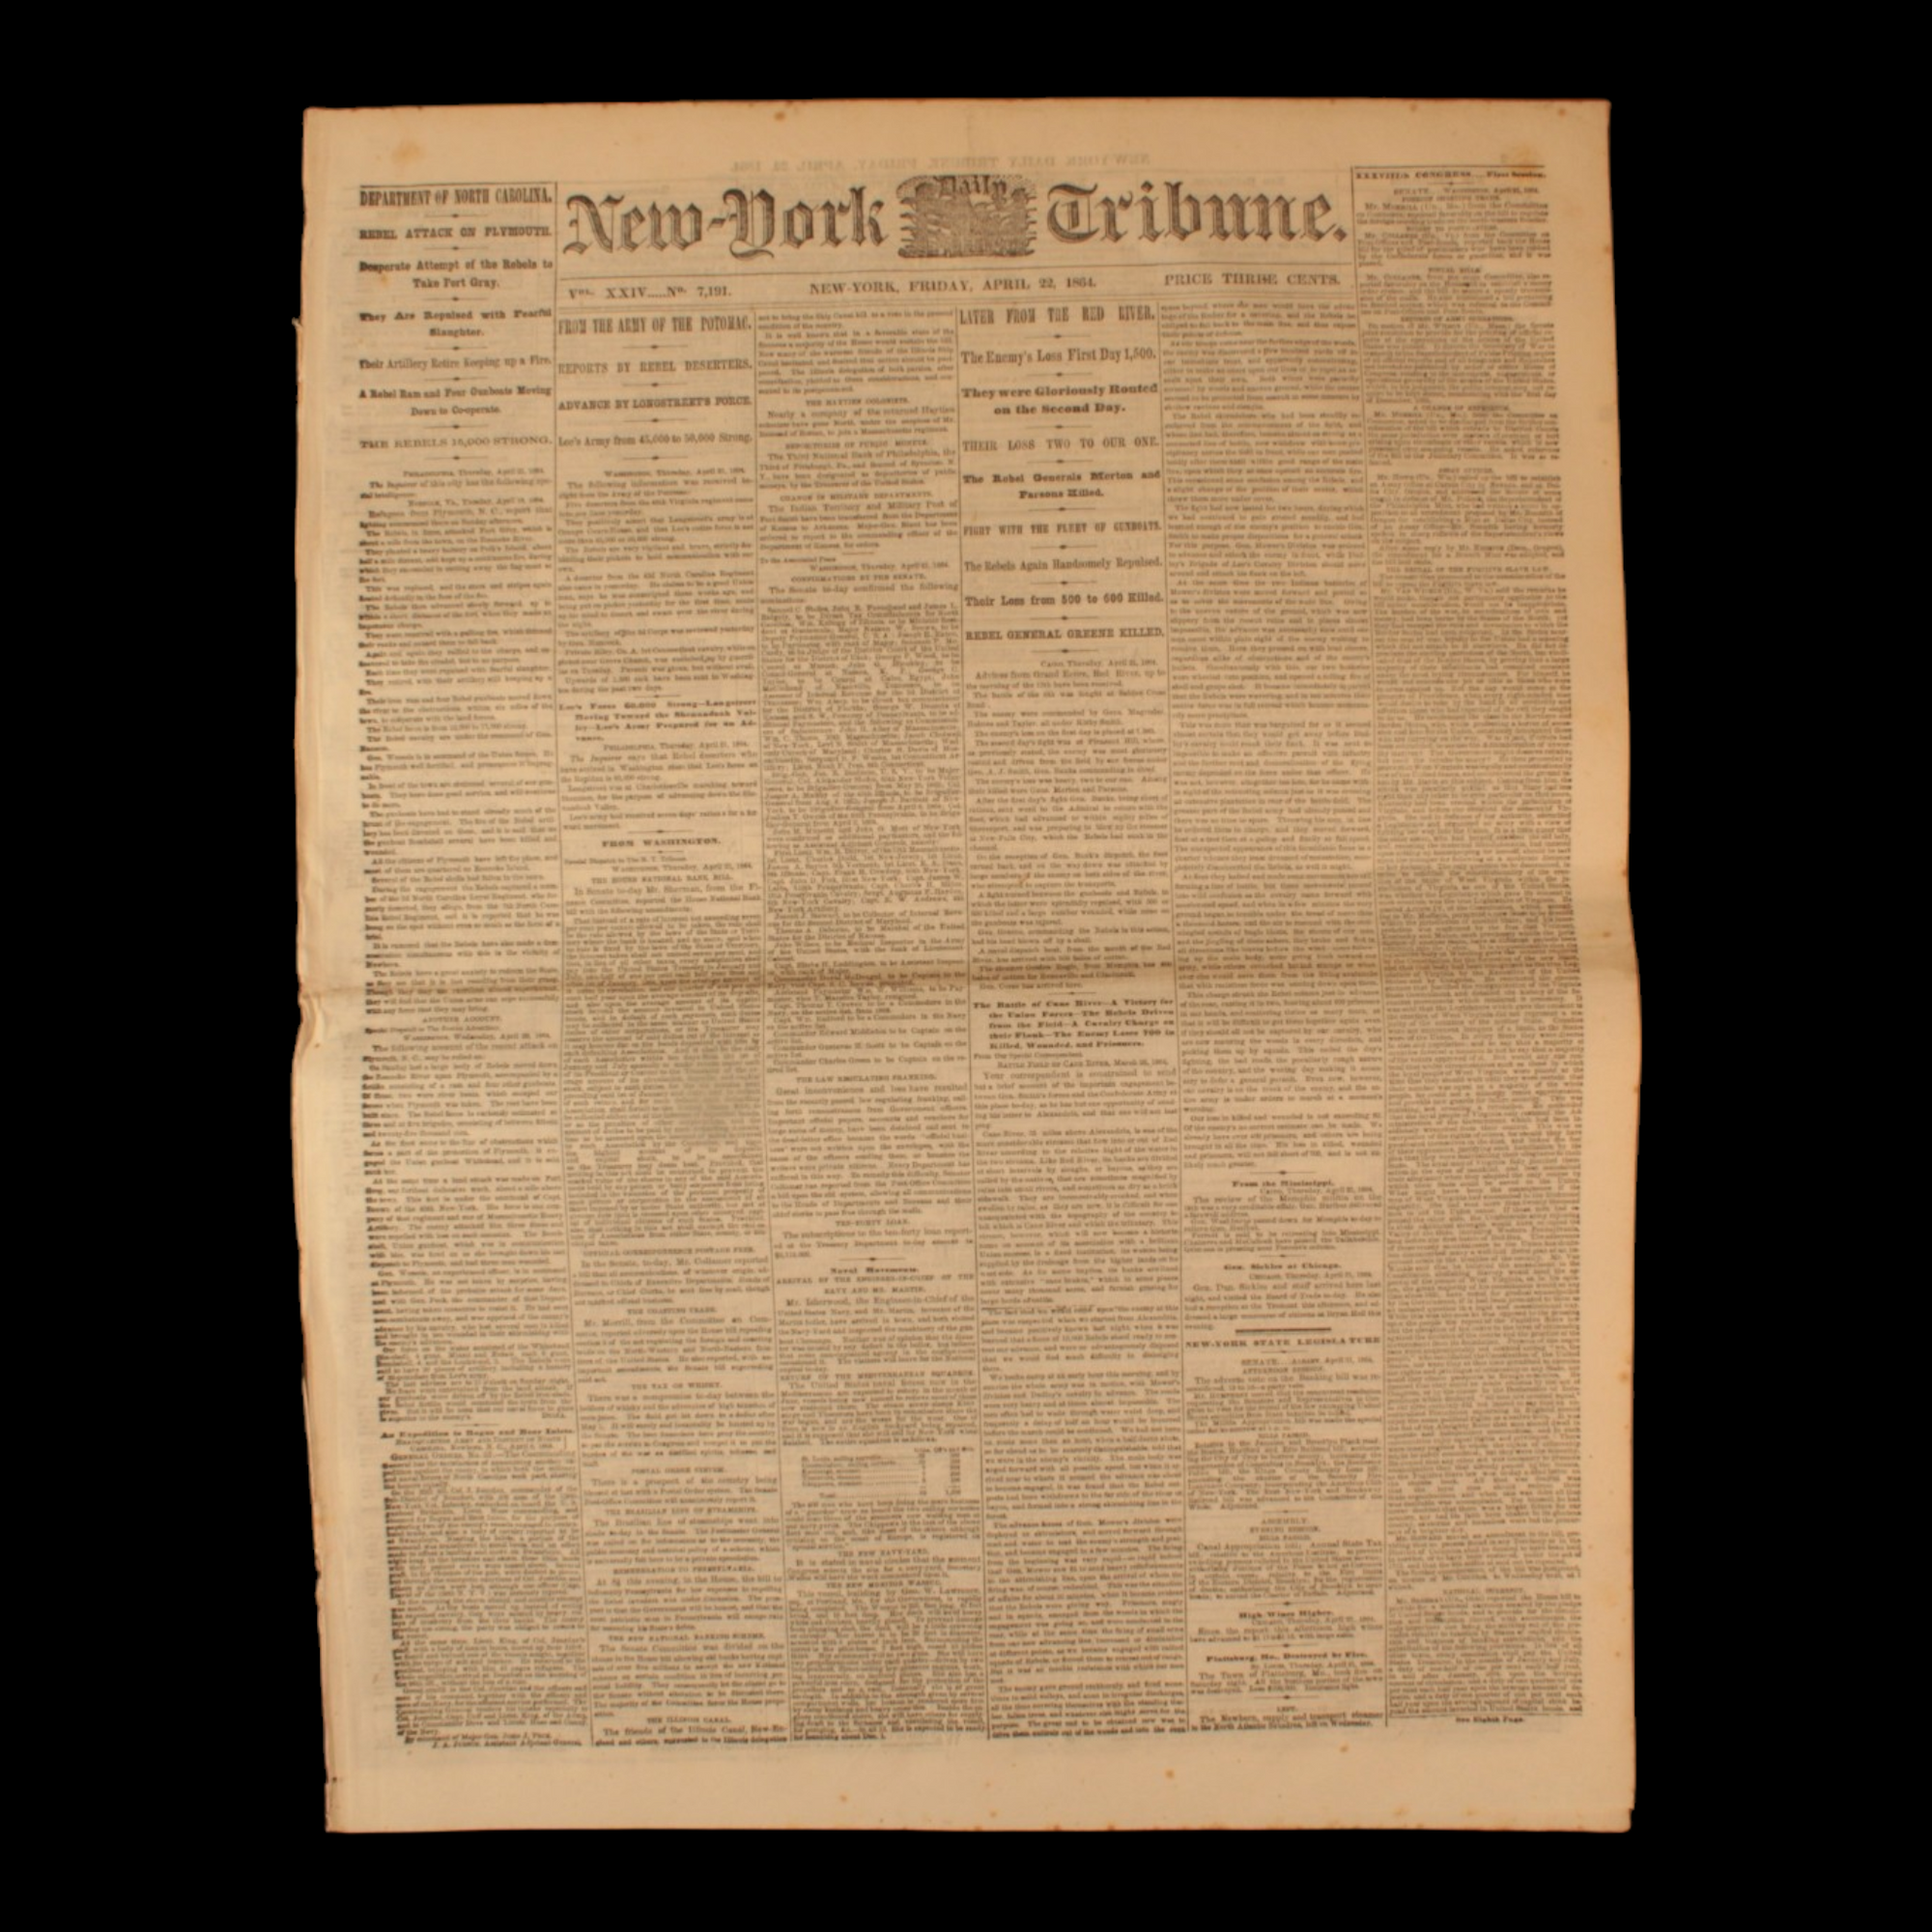 New York Tribune, Civil War Issues